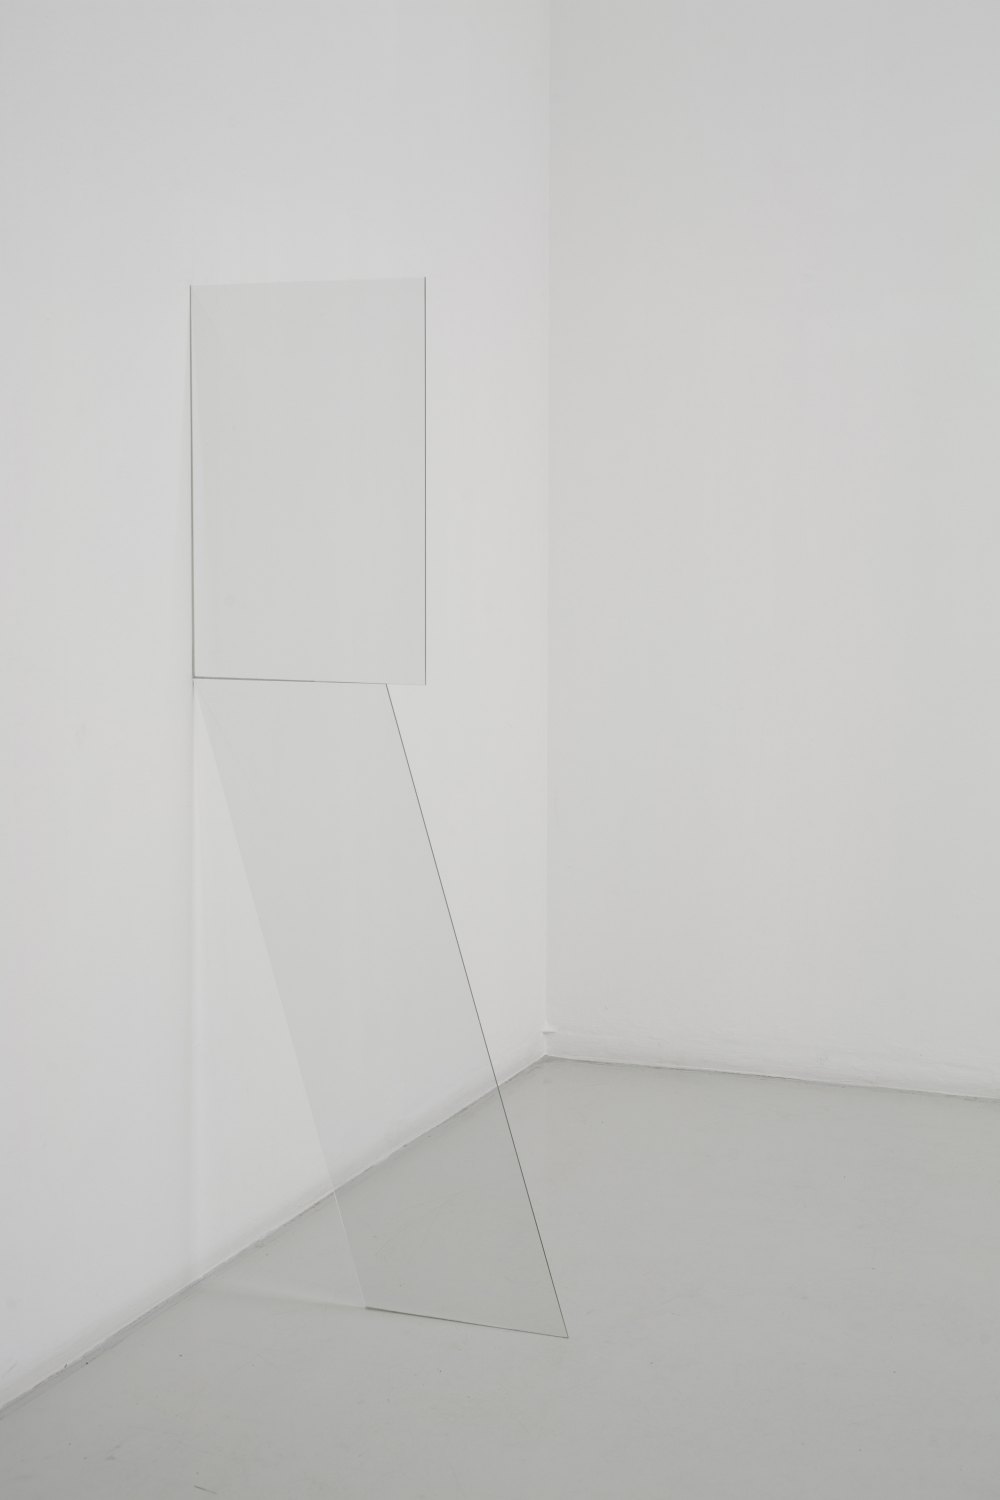 Kitty Kraus Untitled, 2006 Glass, 171 × 68 × 0.5 cm